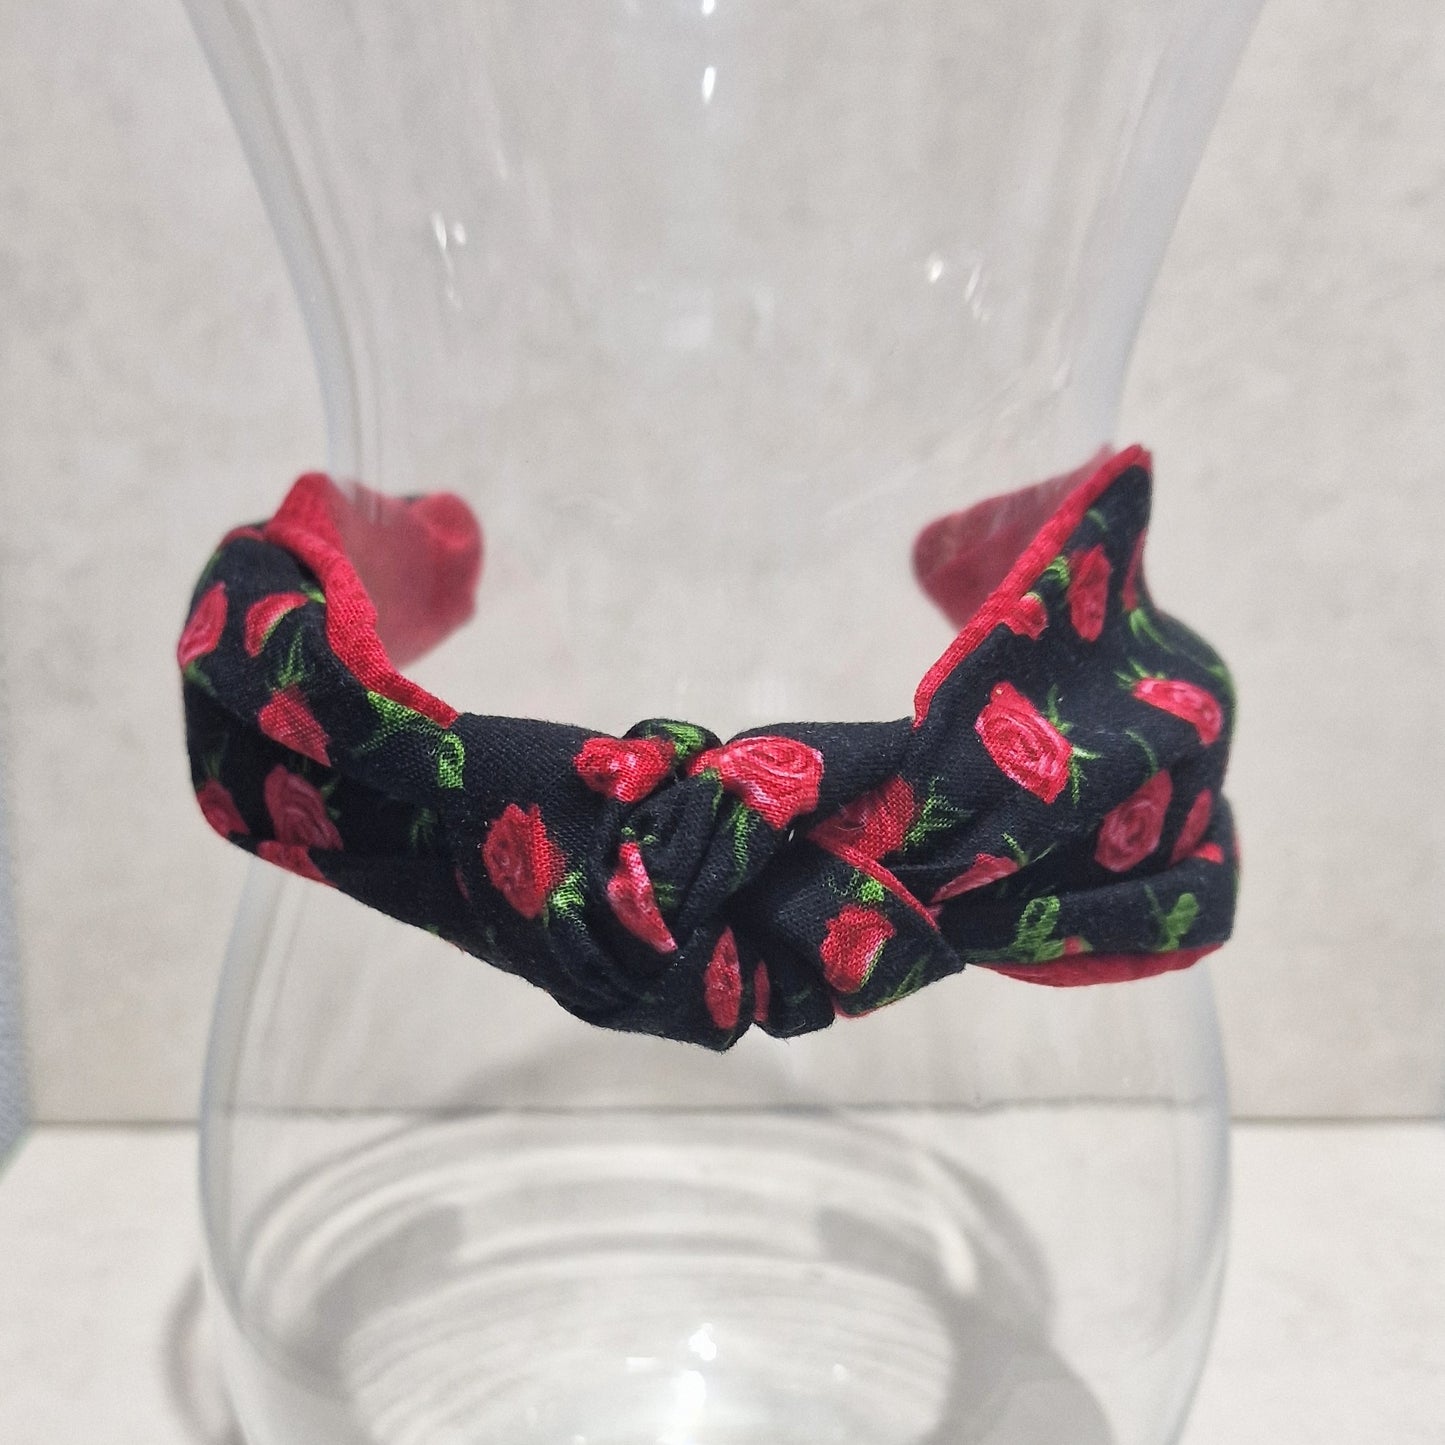 Hairband Red Roses Cotton Fabric Bespoke Top Knot Headband